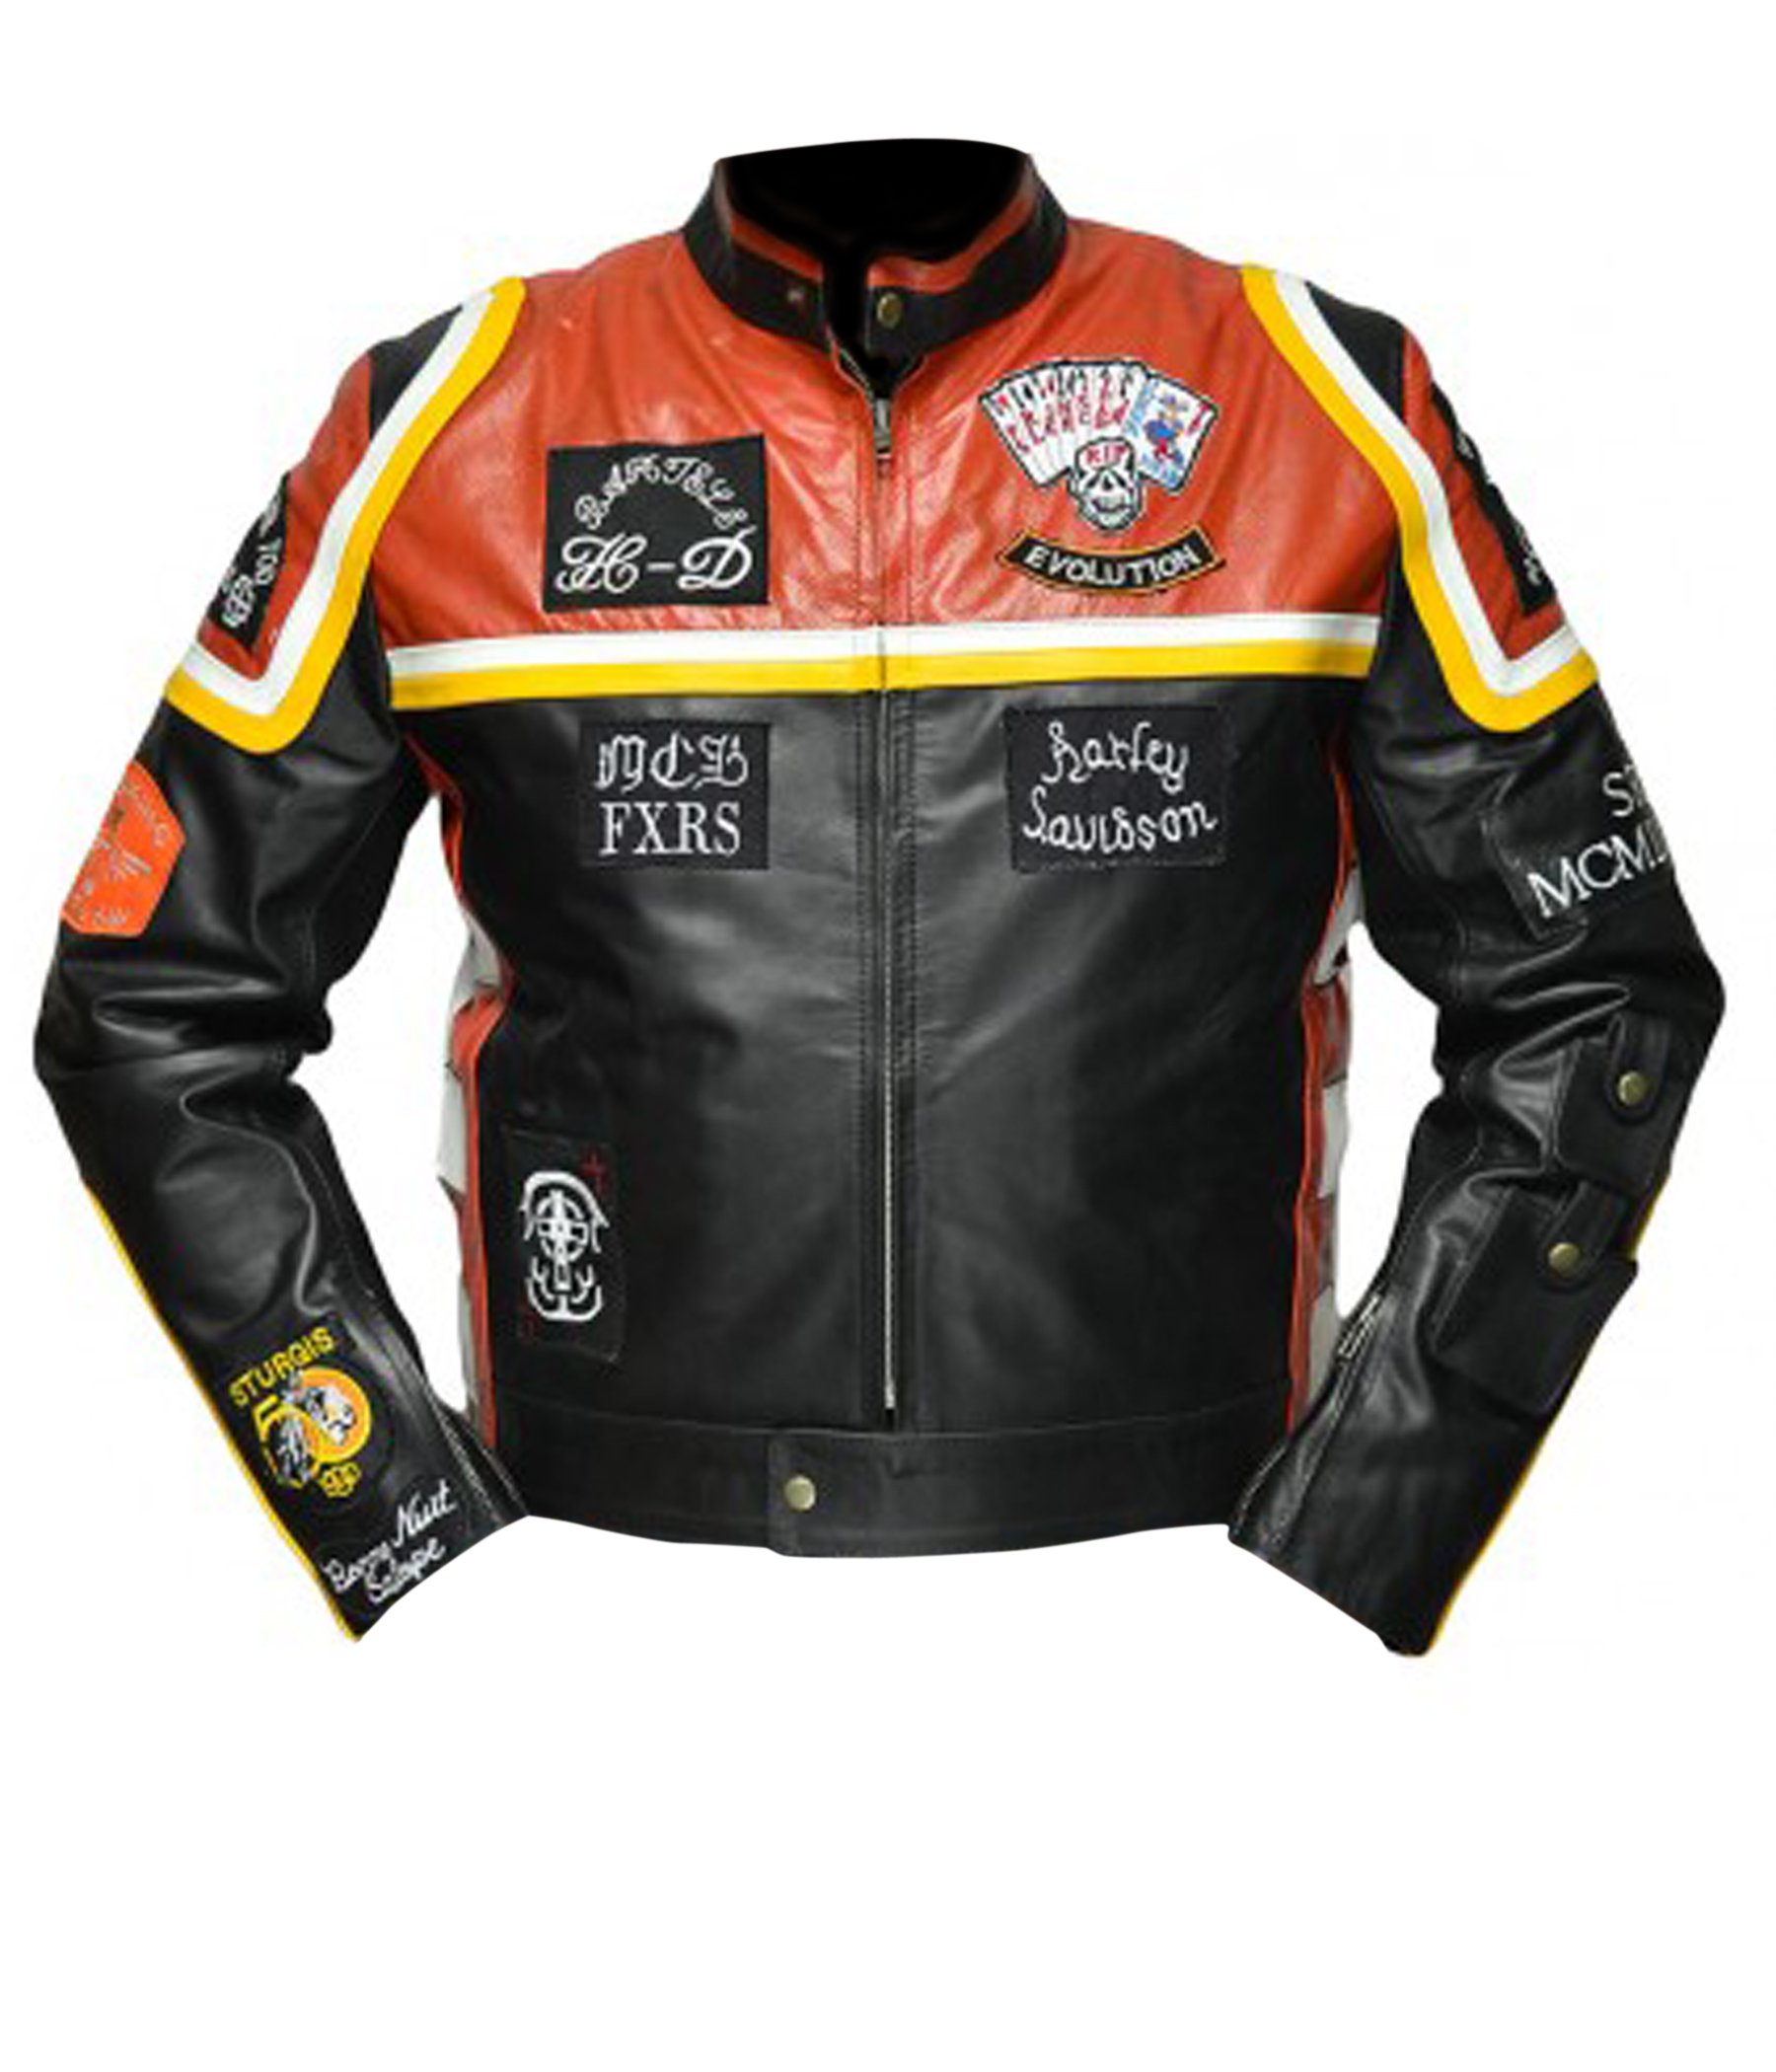 Harley Davidson and Marlboro Man Jacket